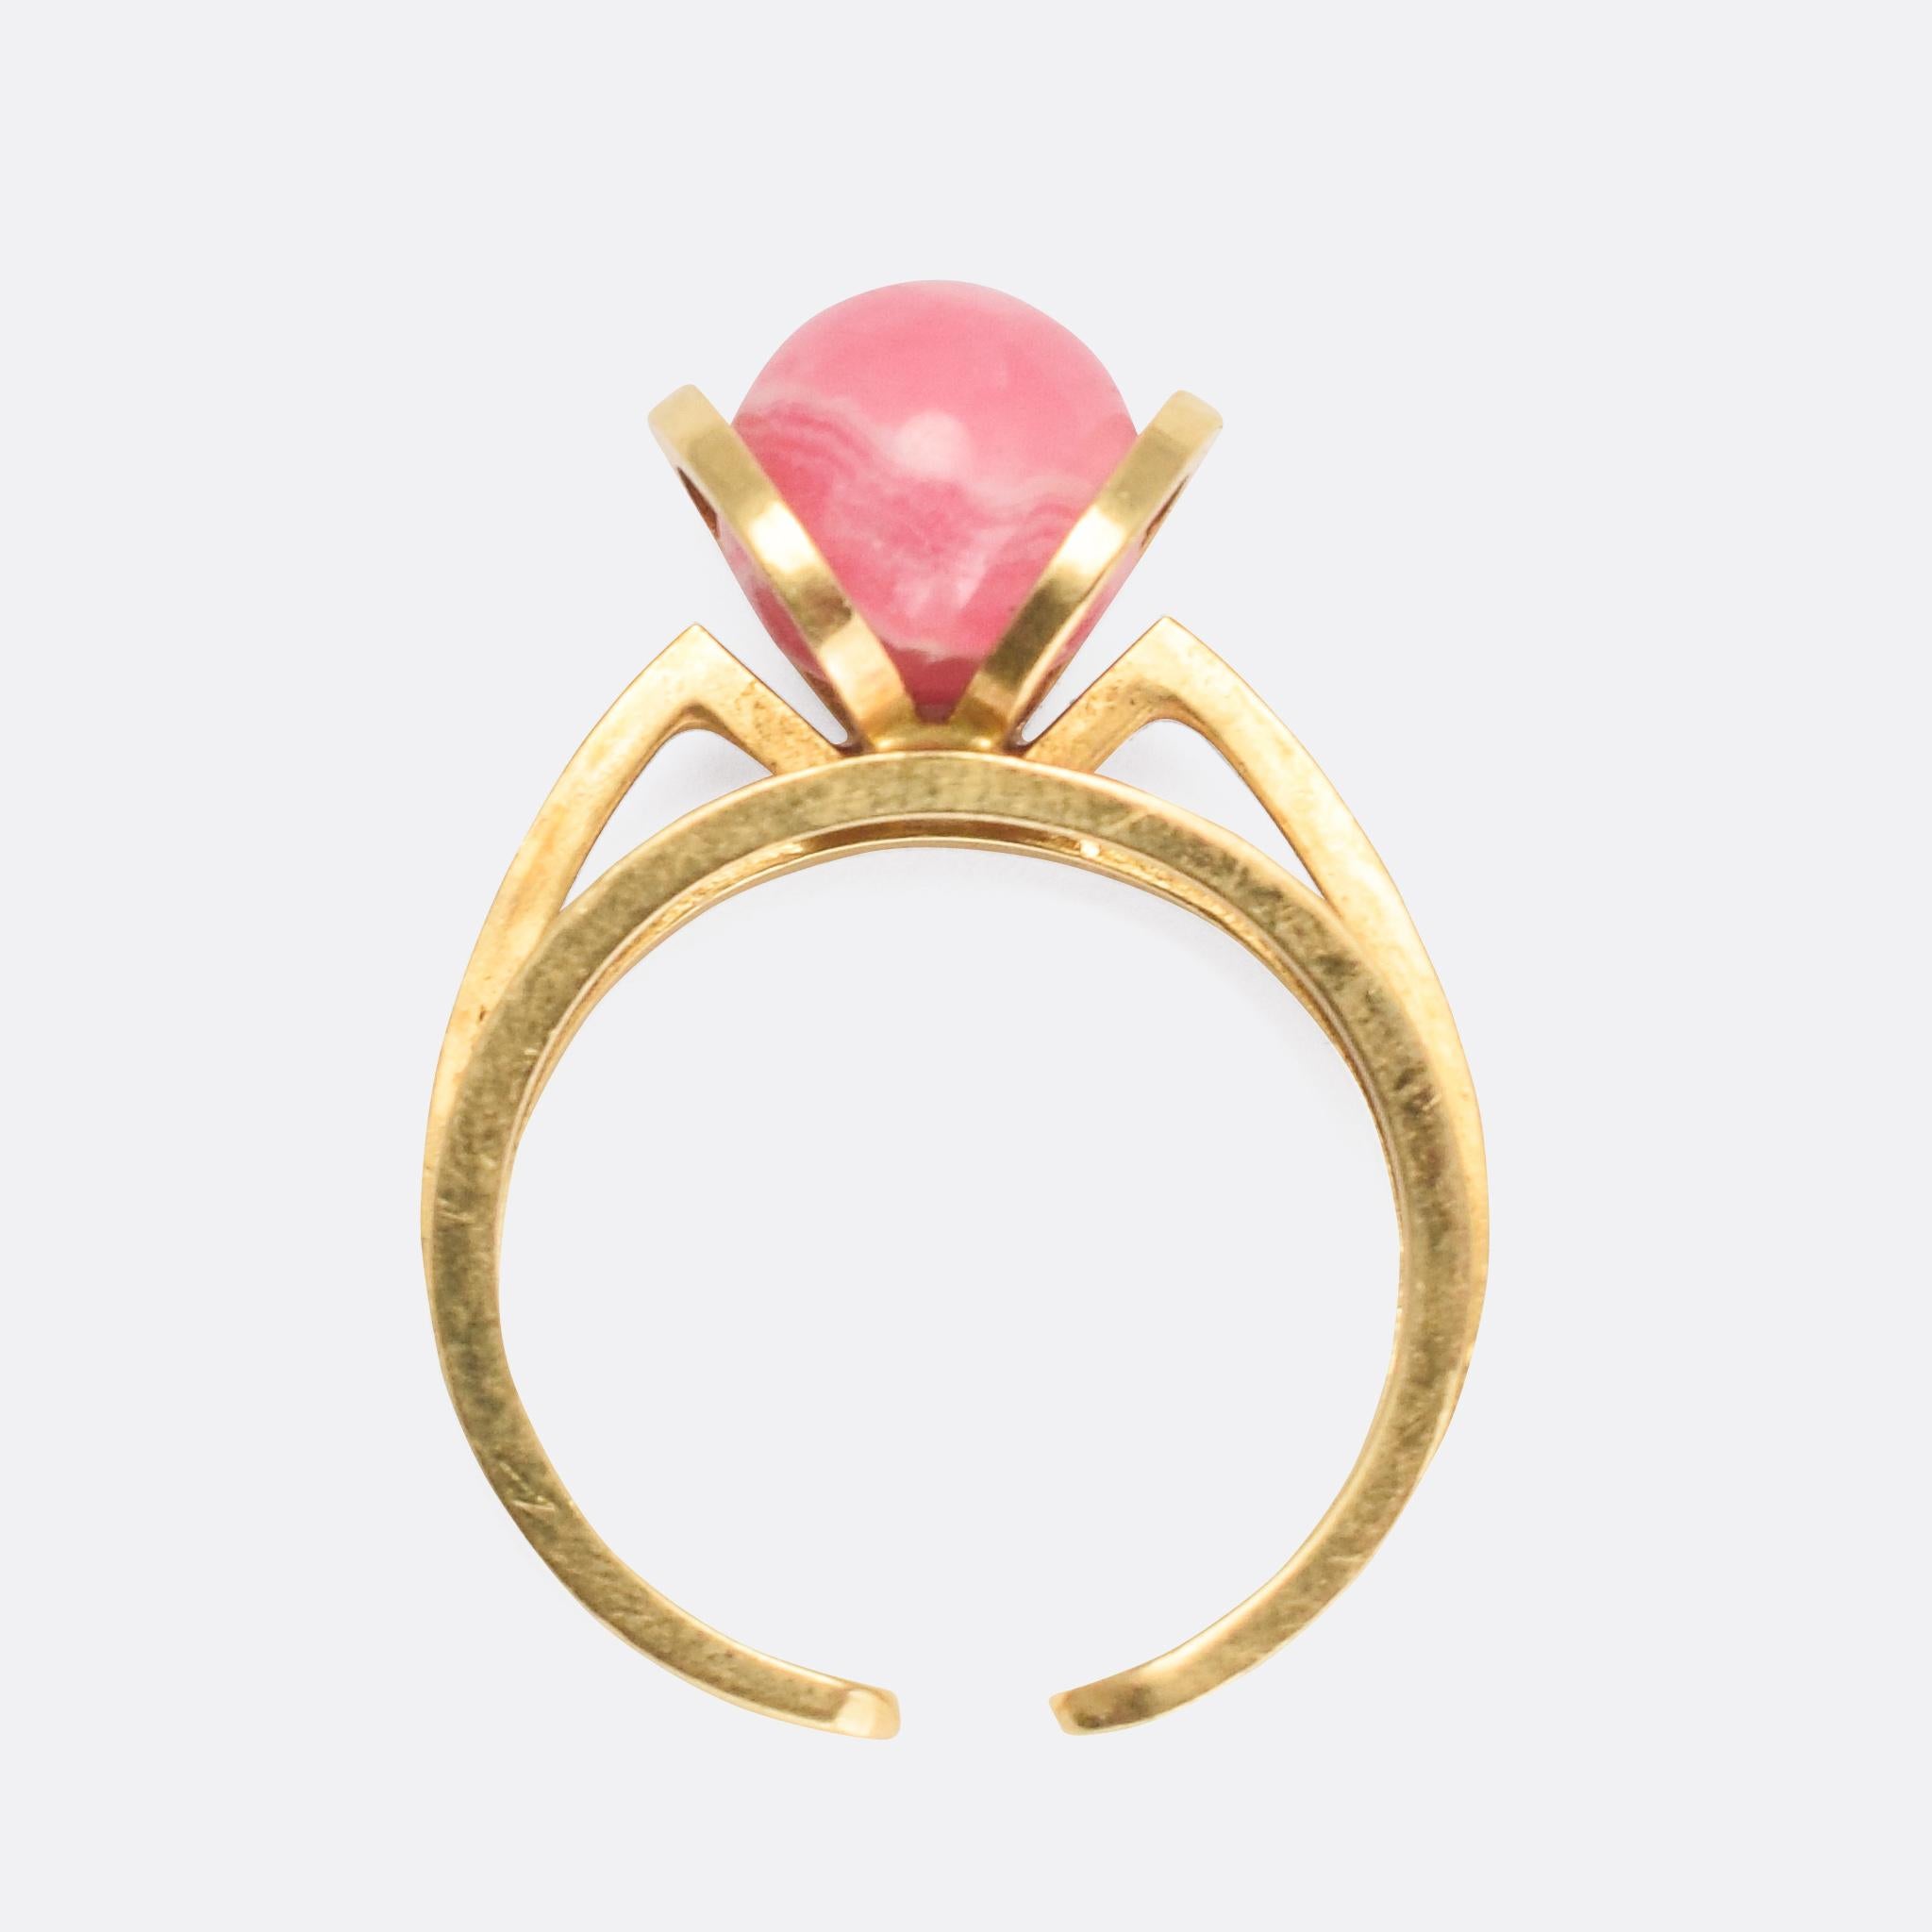 Women's Vintage 1970s Interchangeable Stones Ring